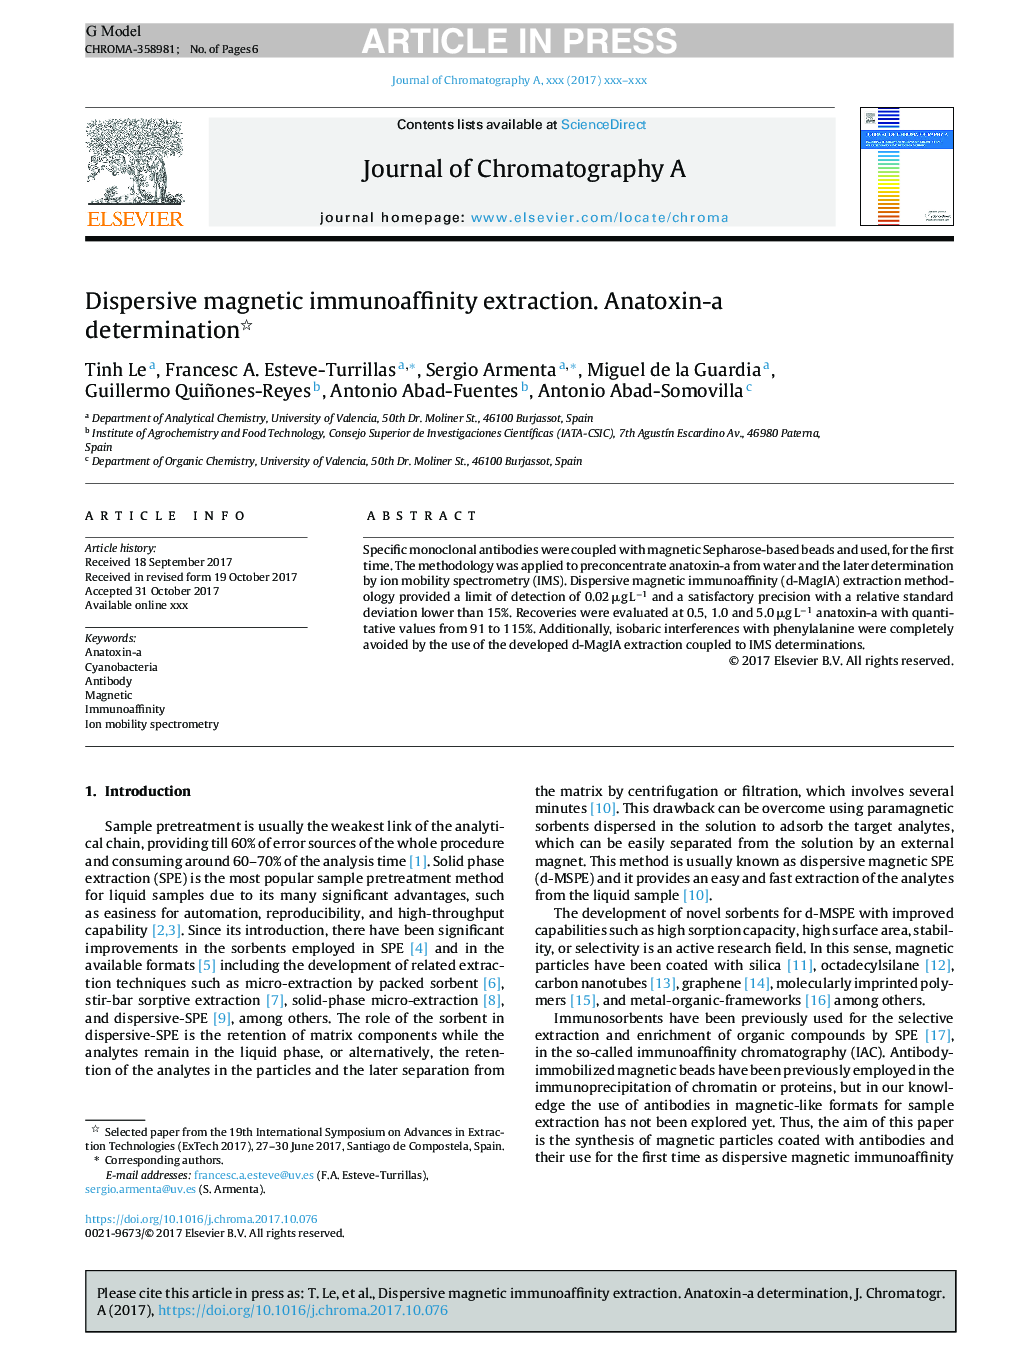 Dispersive magnetic immunoaffinity extraction. Anatoxin-a determination